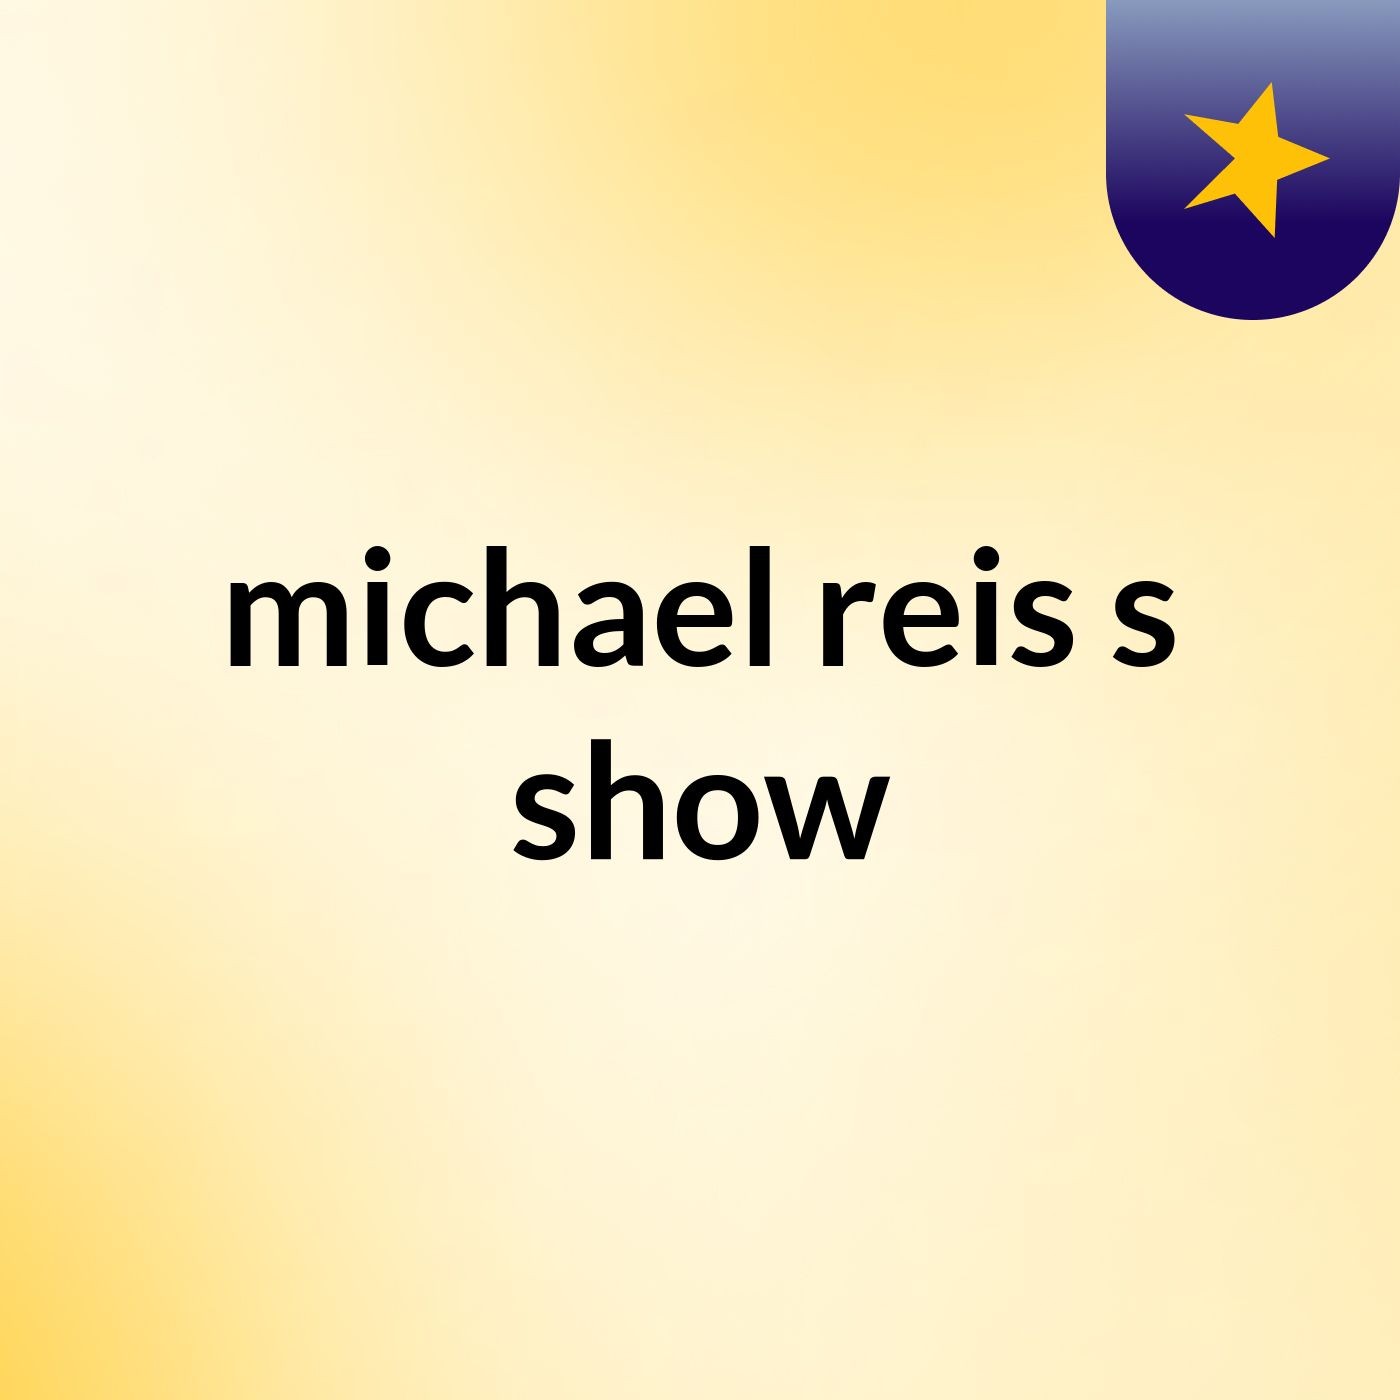 michael reis's show